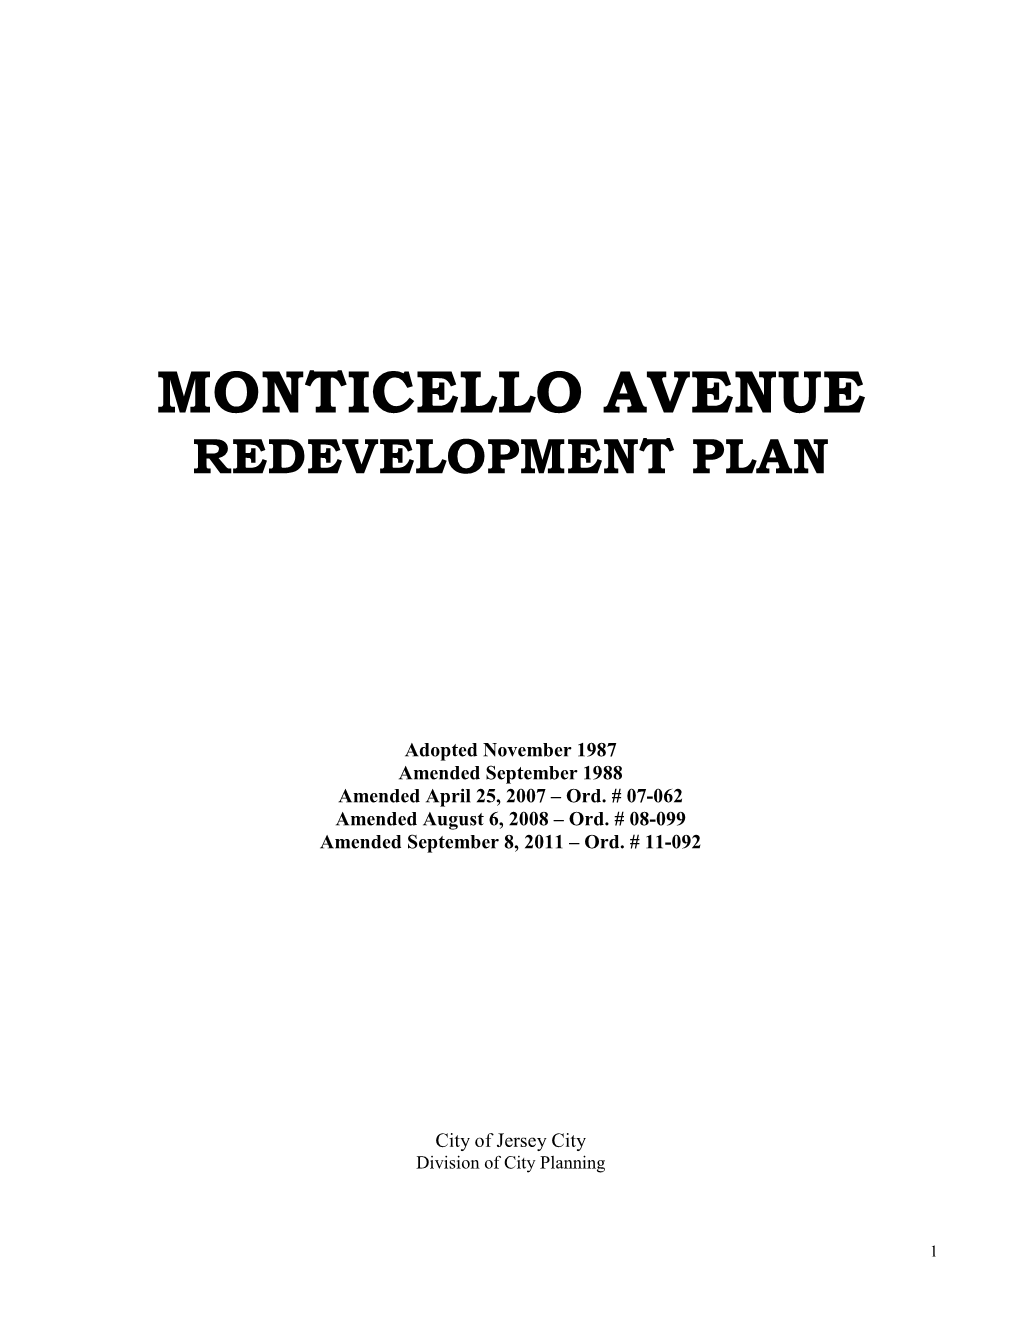 Monticello Avenue Redevelopment Plan